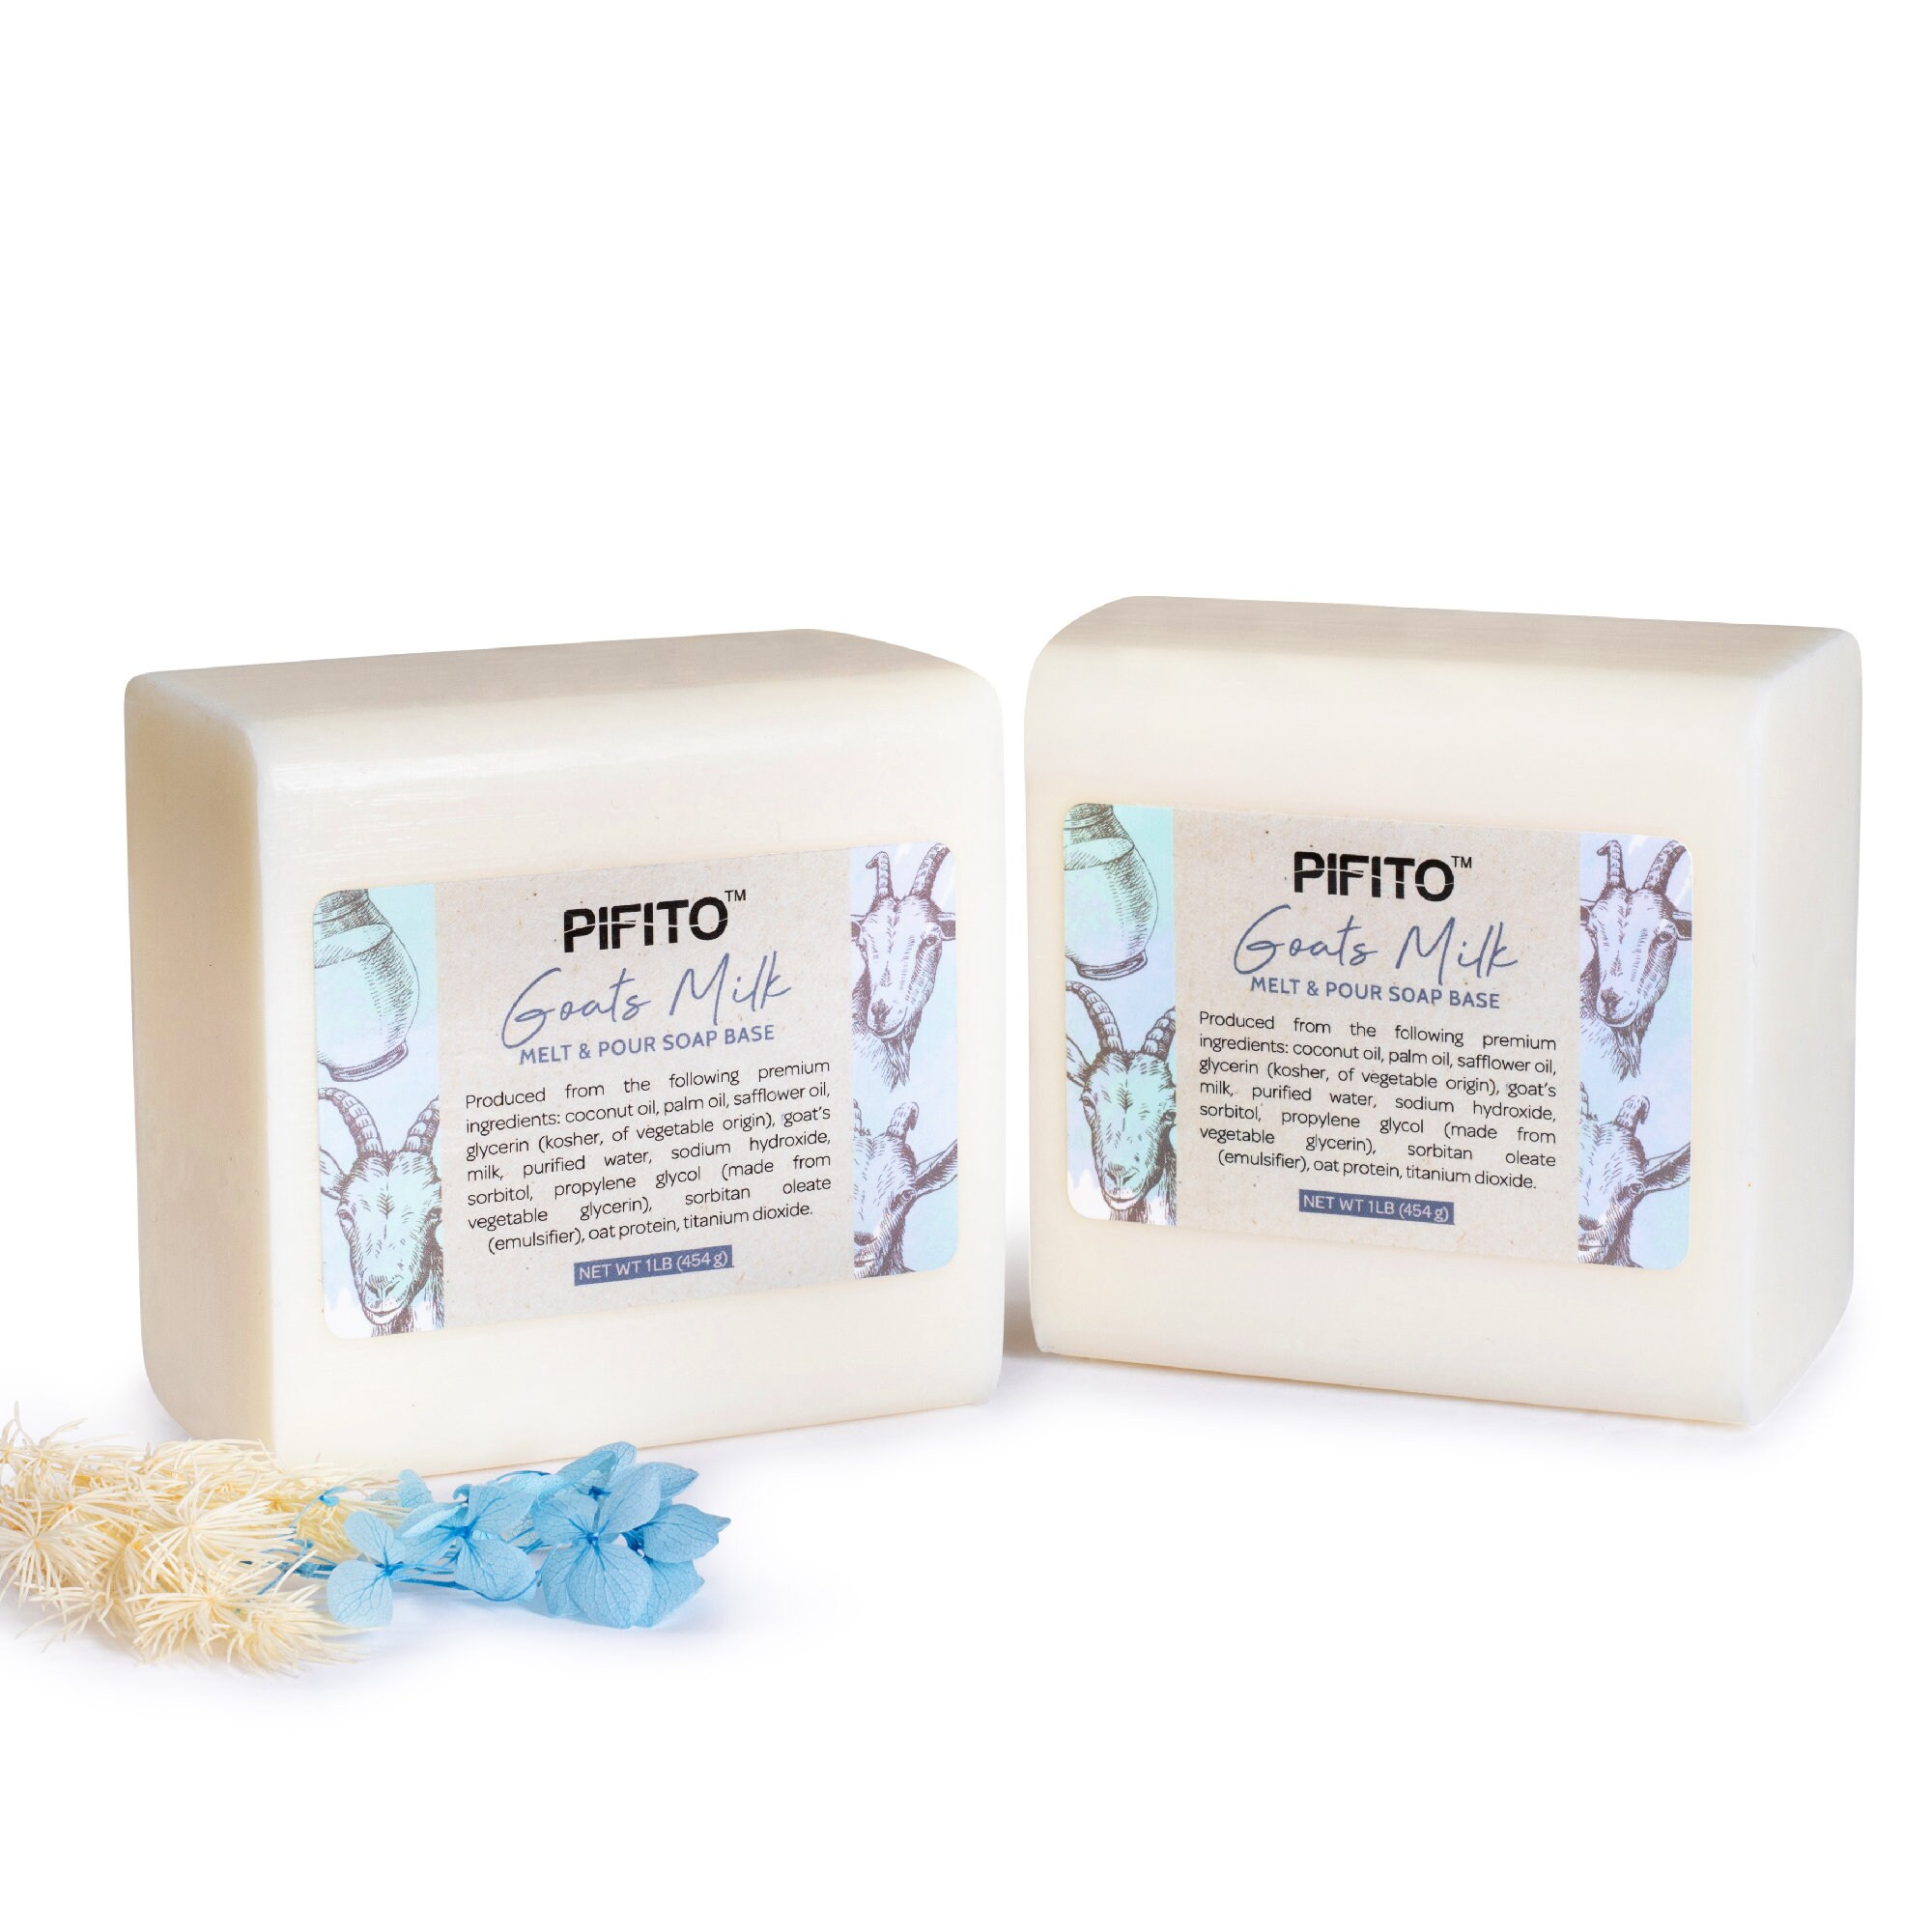 Goats milk glycerin melt & pour soap base organic pure 10 lb buy